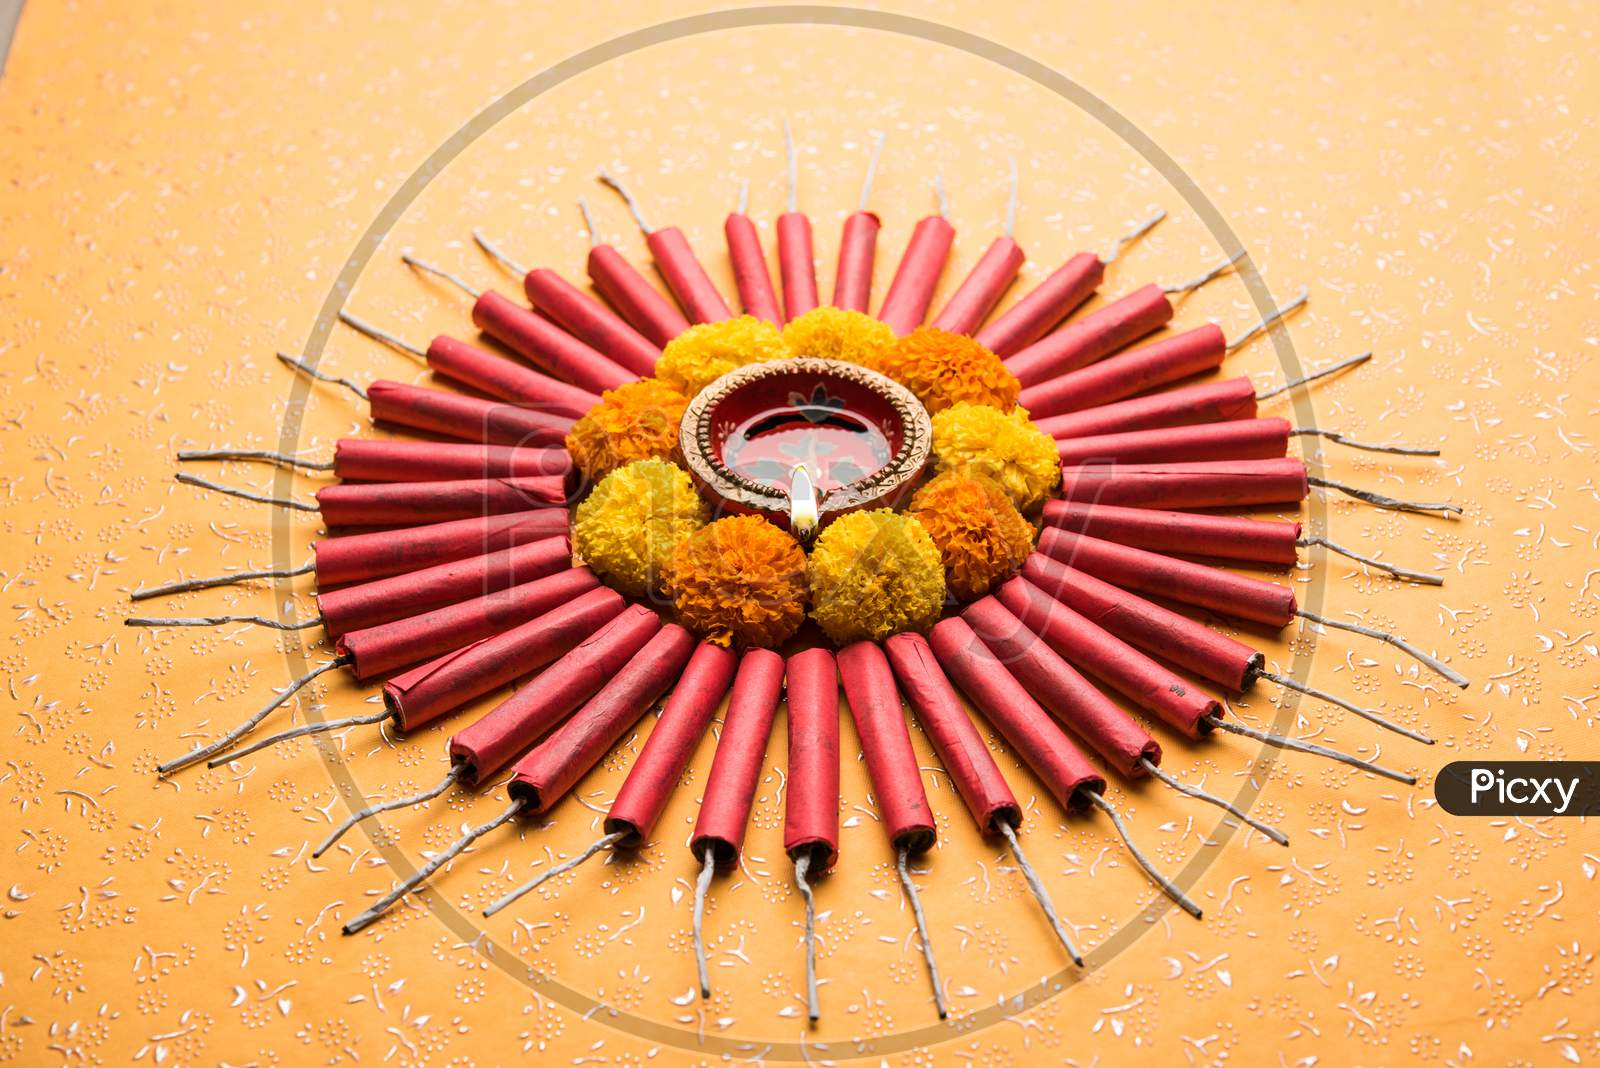 diwali rangoli using snacks, firecrackers and oil lamp or diya